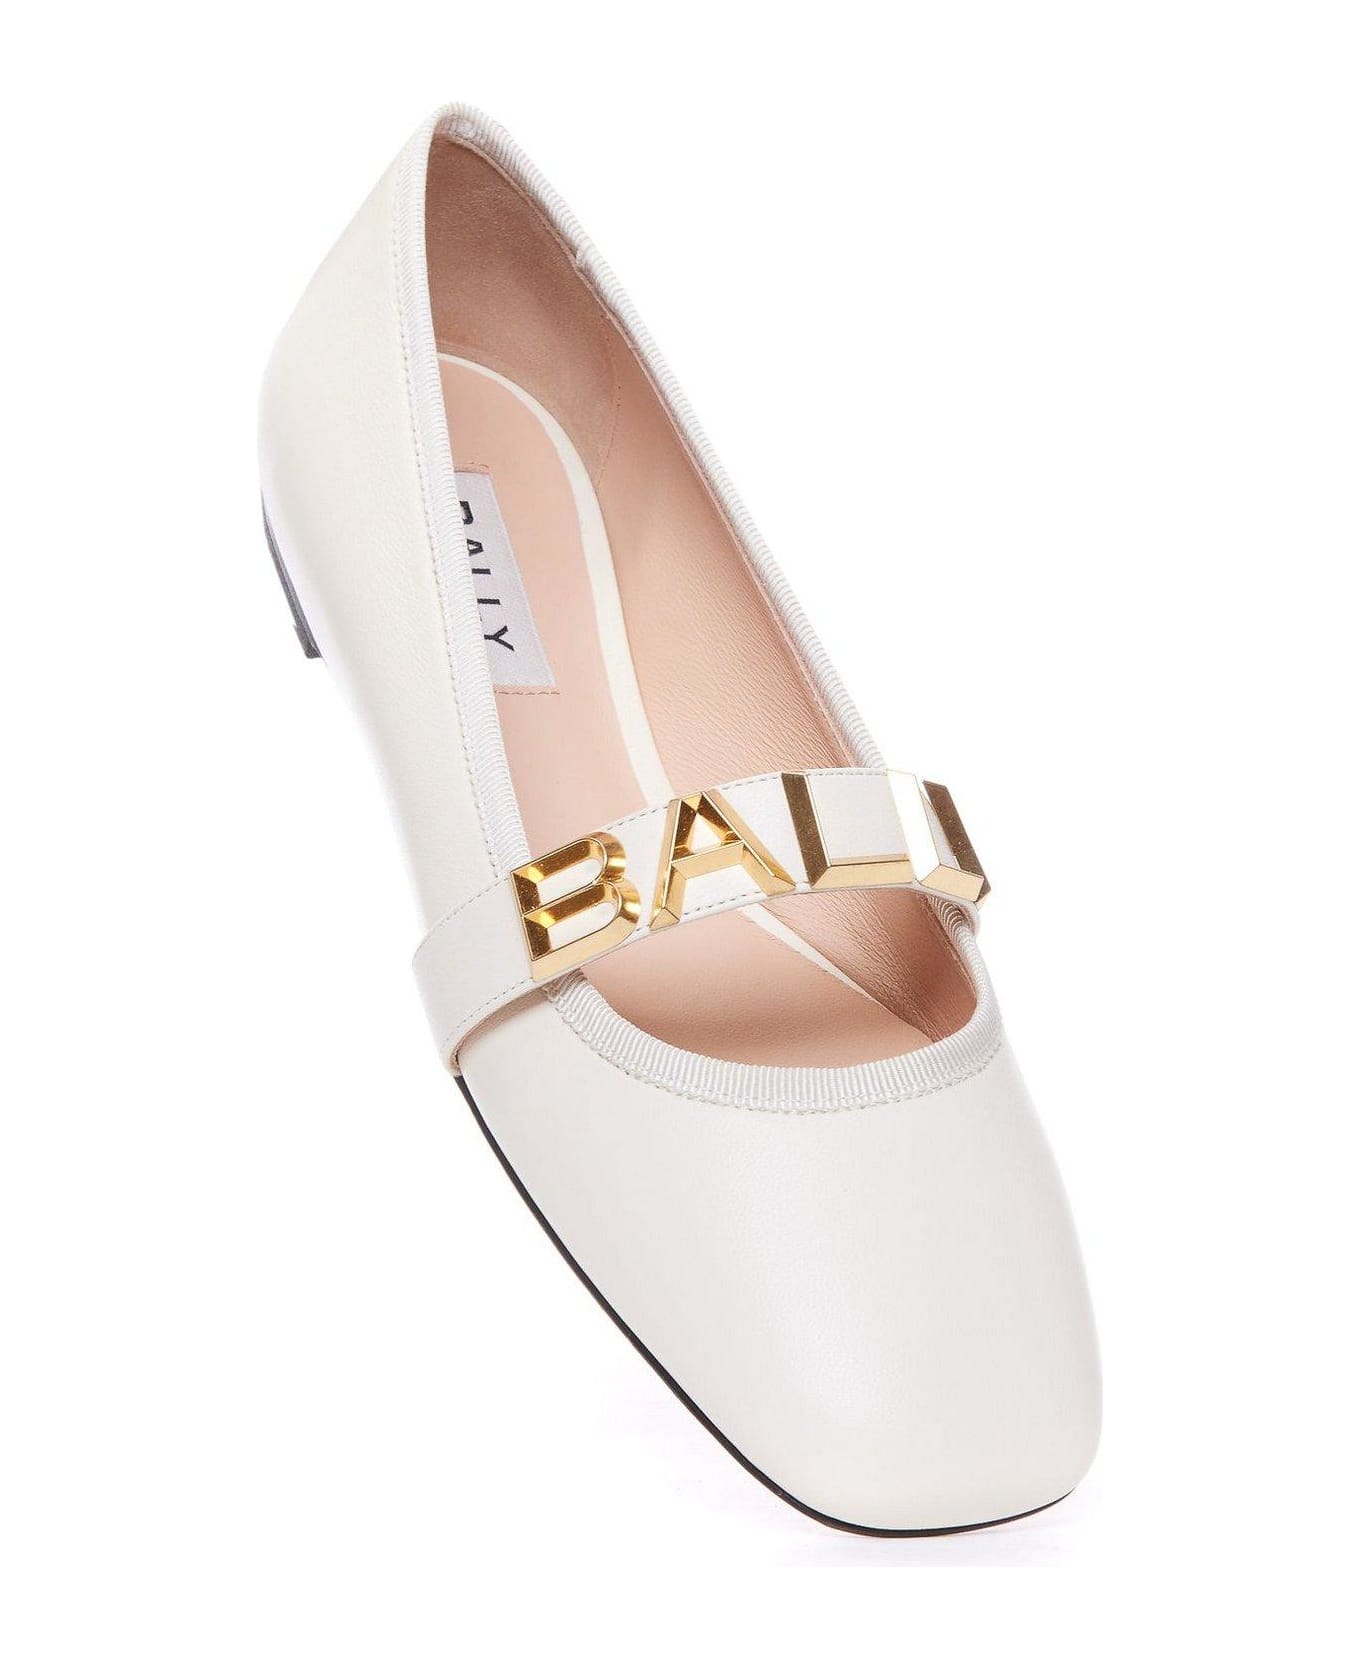 Bally Balby Squared Toe Ballet Flats - Cream